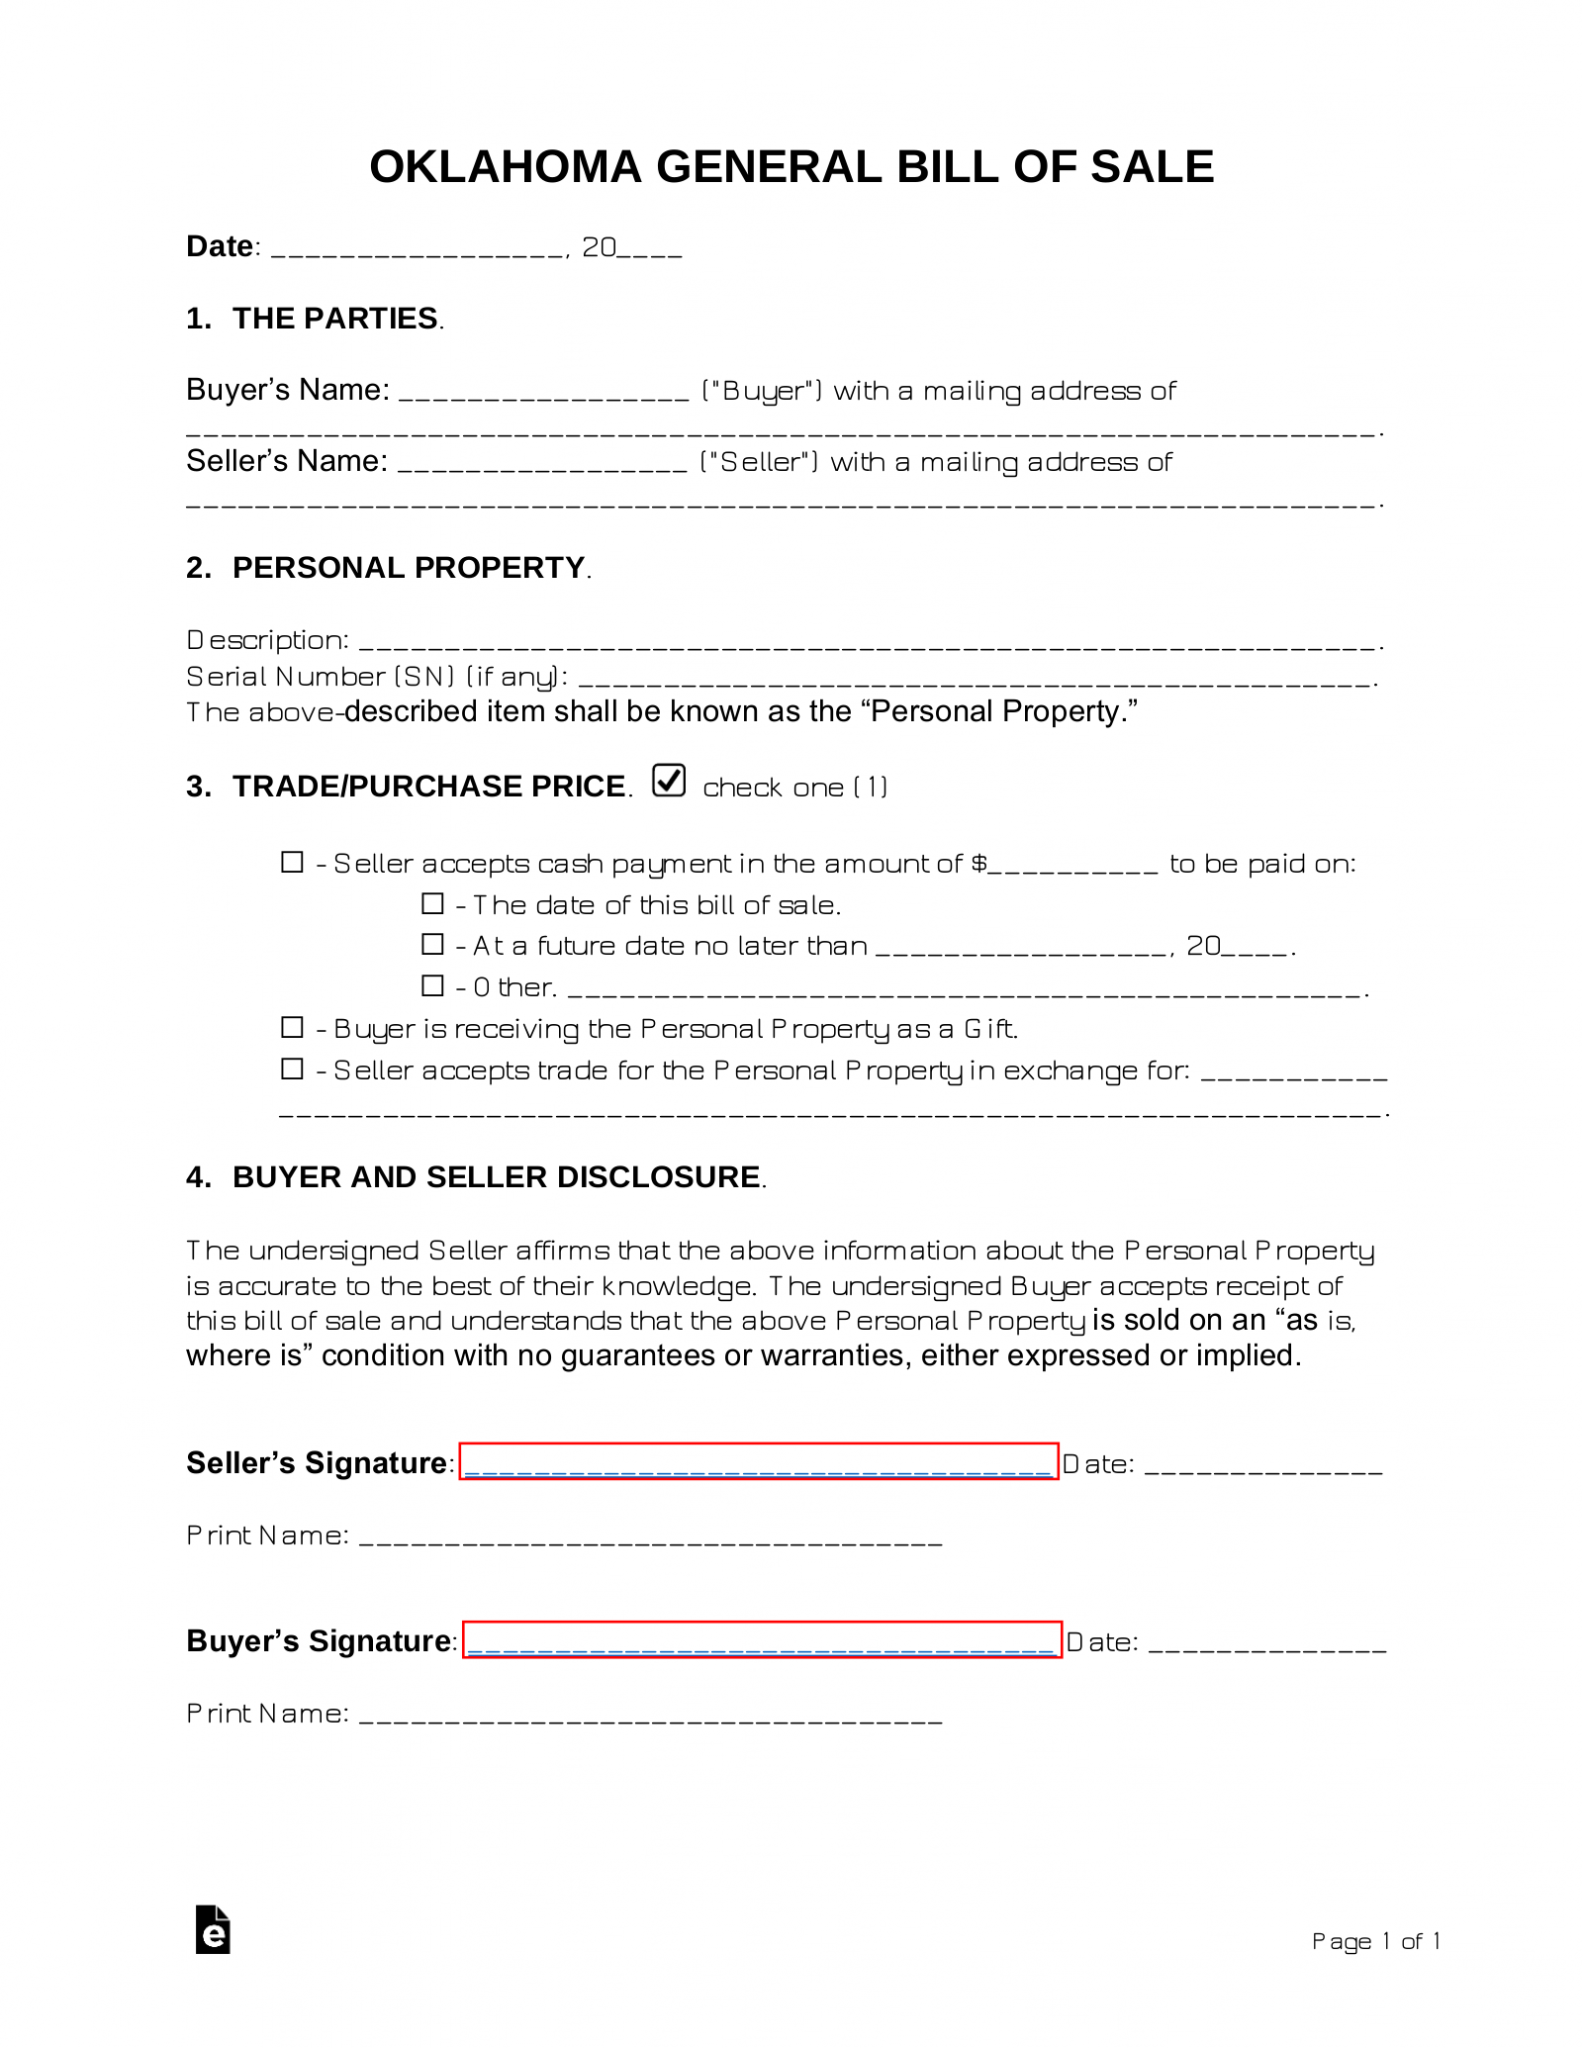 free-oklahoma-bill-of-sale-forms-4-pdf-word-eforms